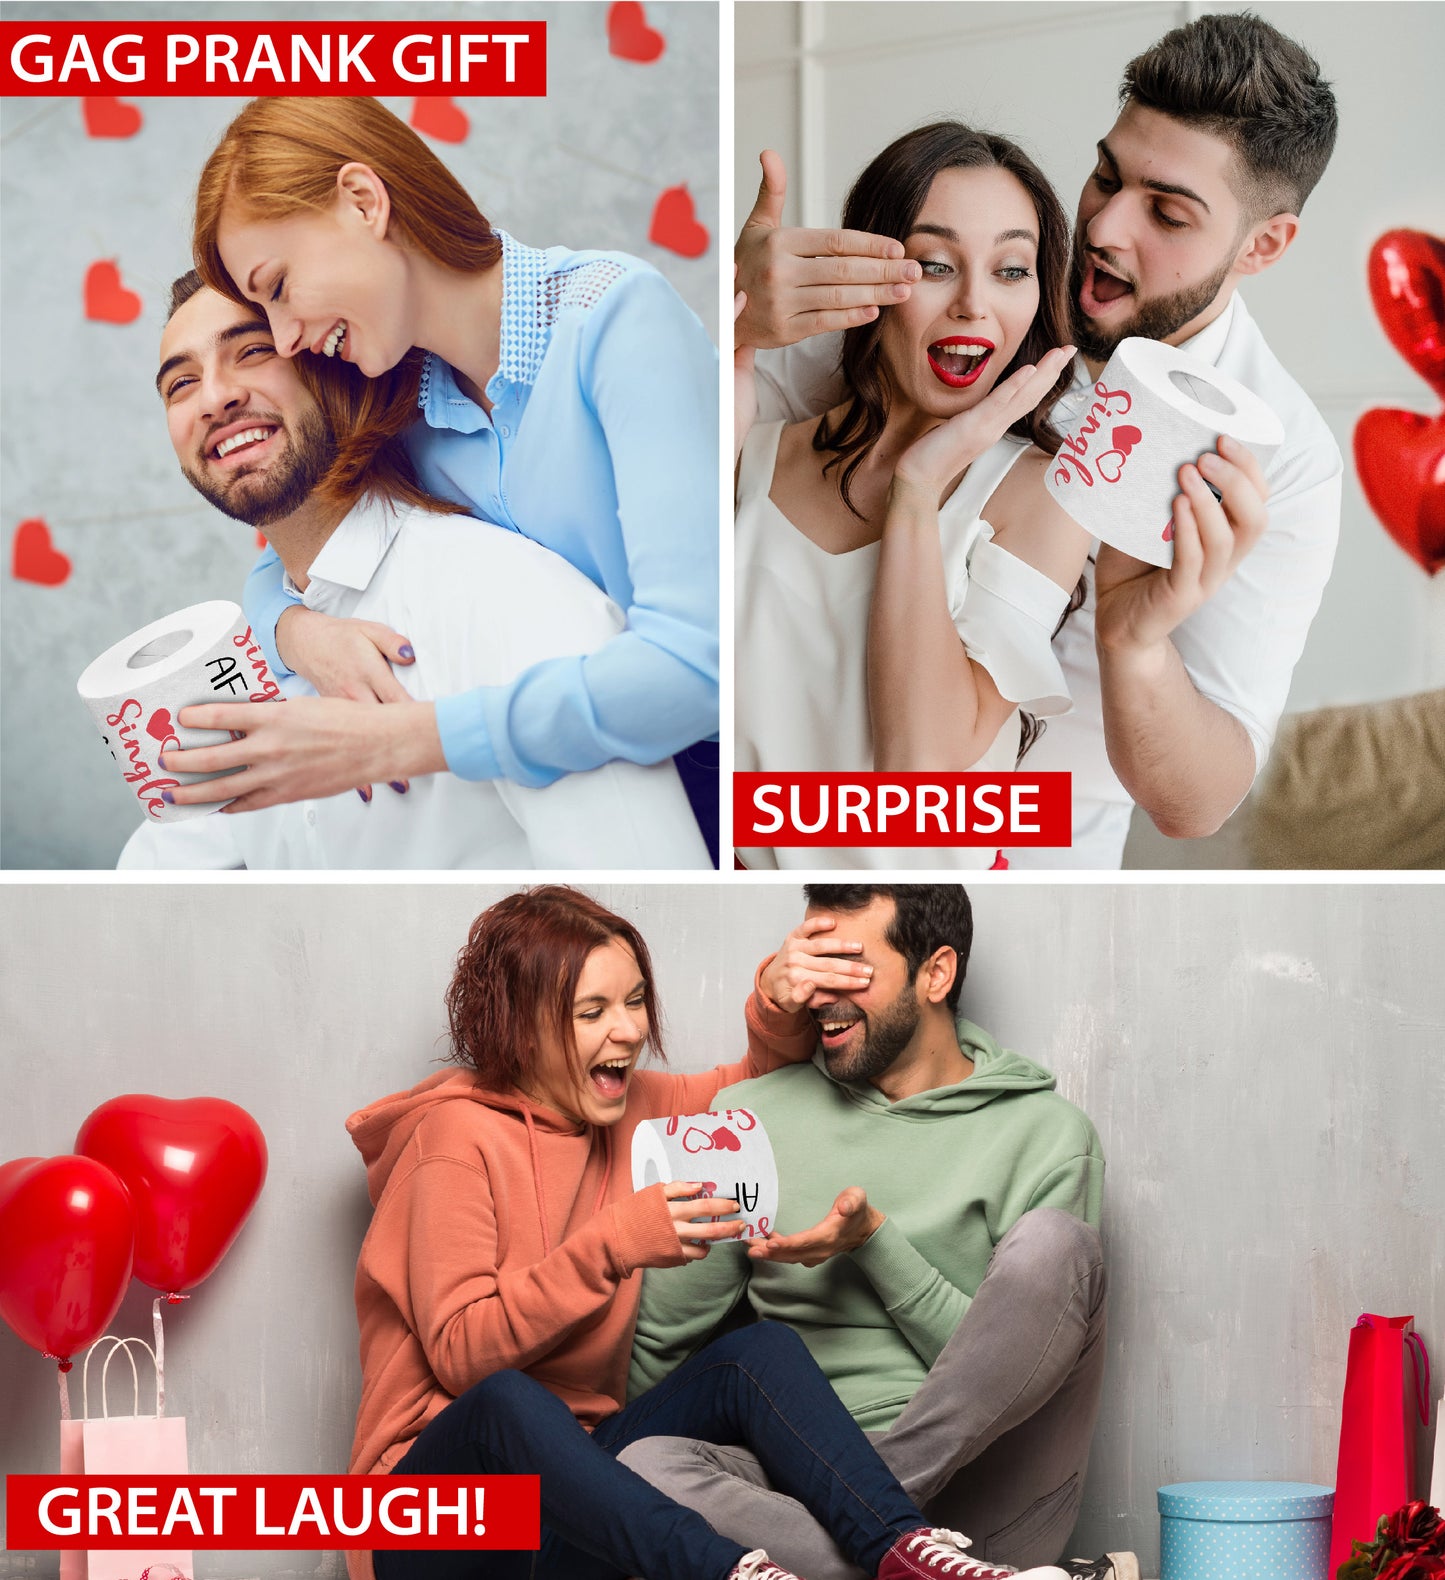 Printed TP Single AF Valentine's Funny Toilet Paper Roll Gag Gift for Singles